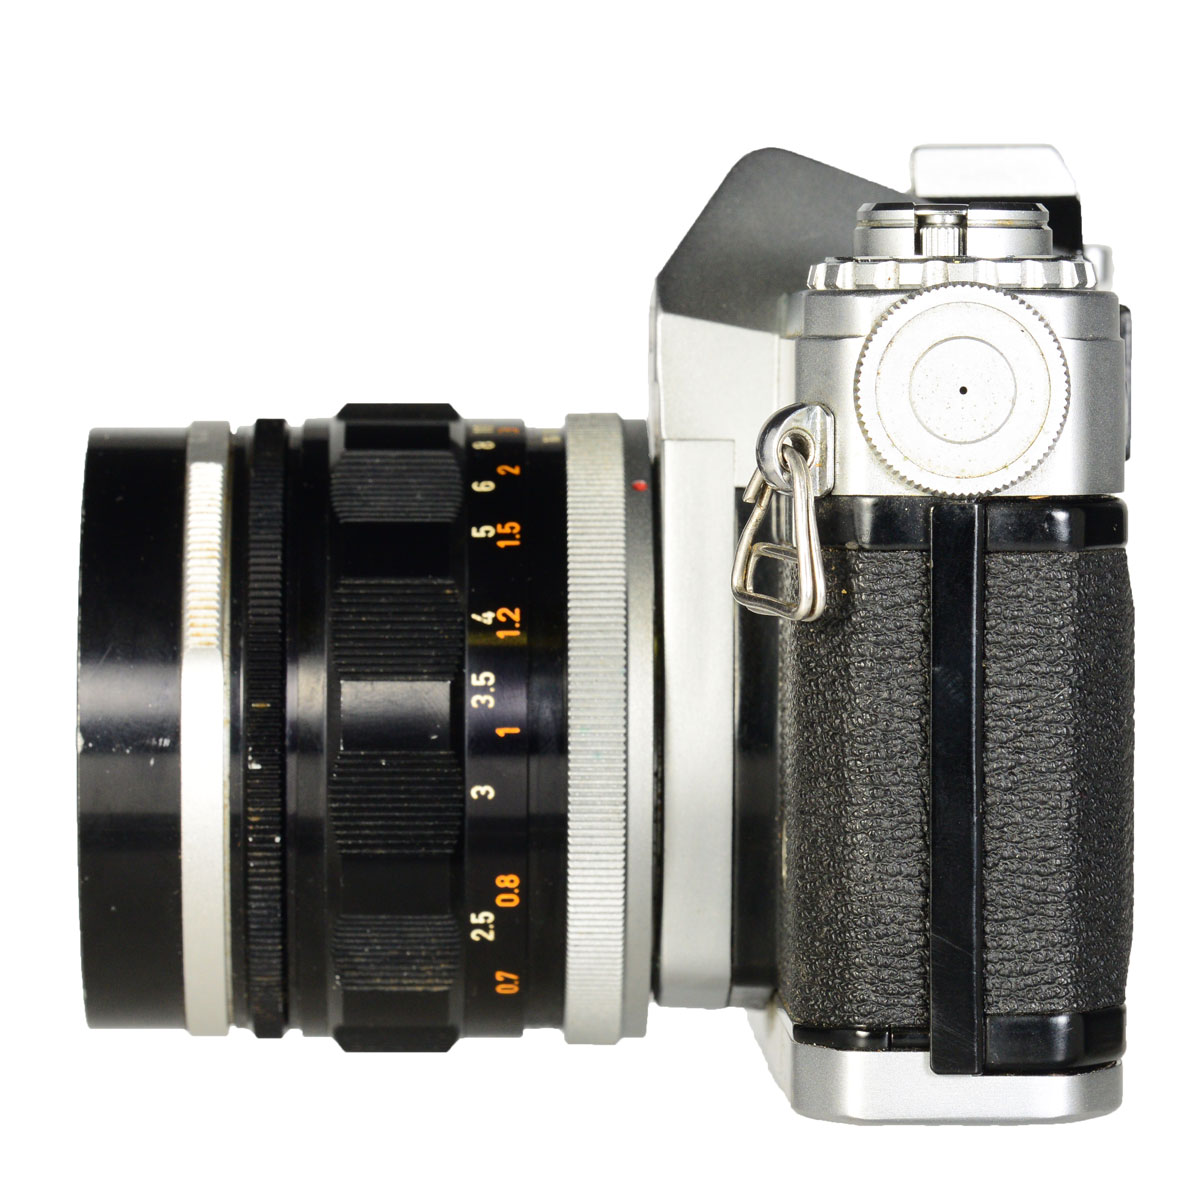 Canon Pellix QL (bay. FD) б/у